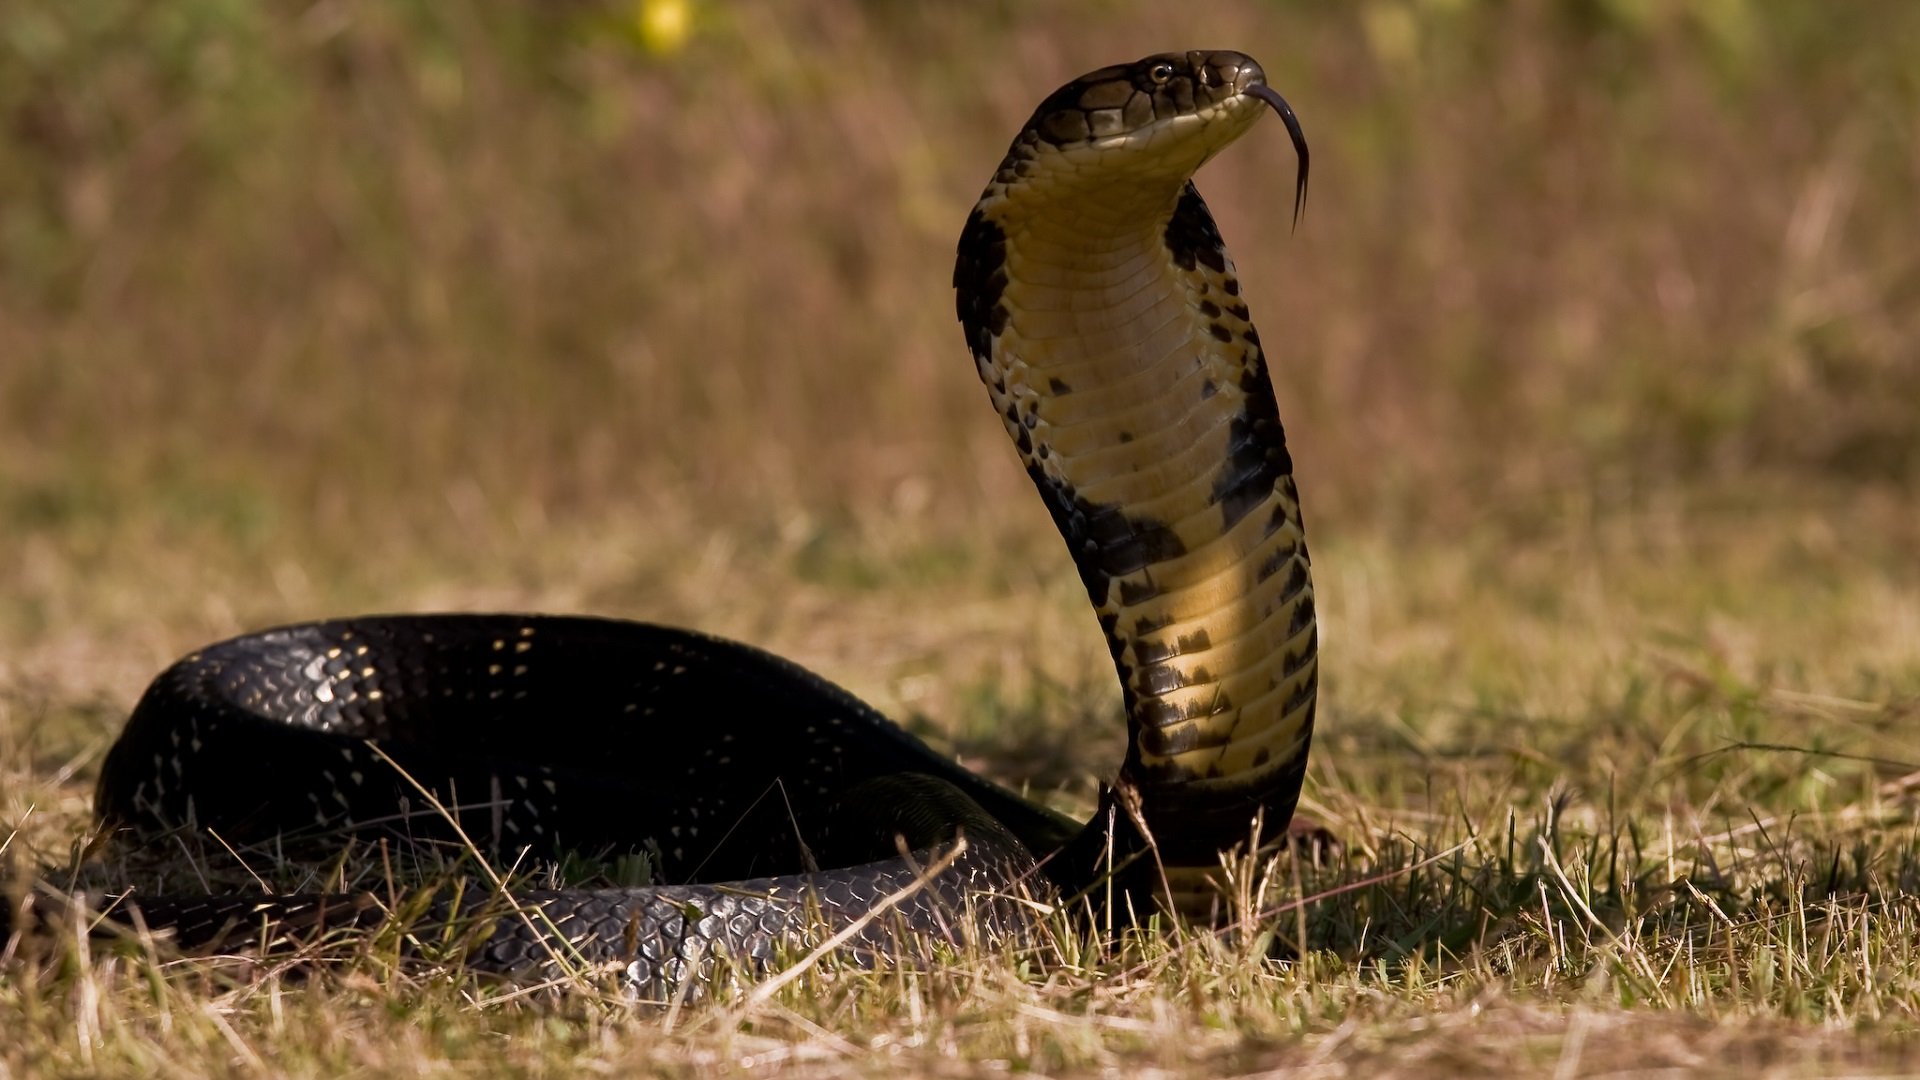 snake wallpaper,vertebrate,snake,reptile,king cobra,terrestrial animal